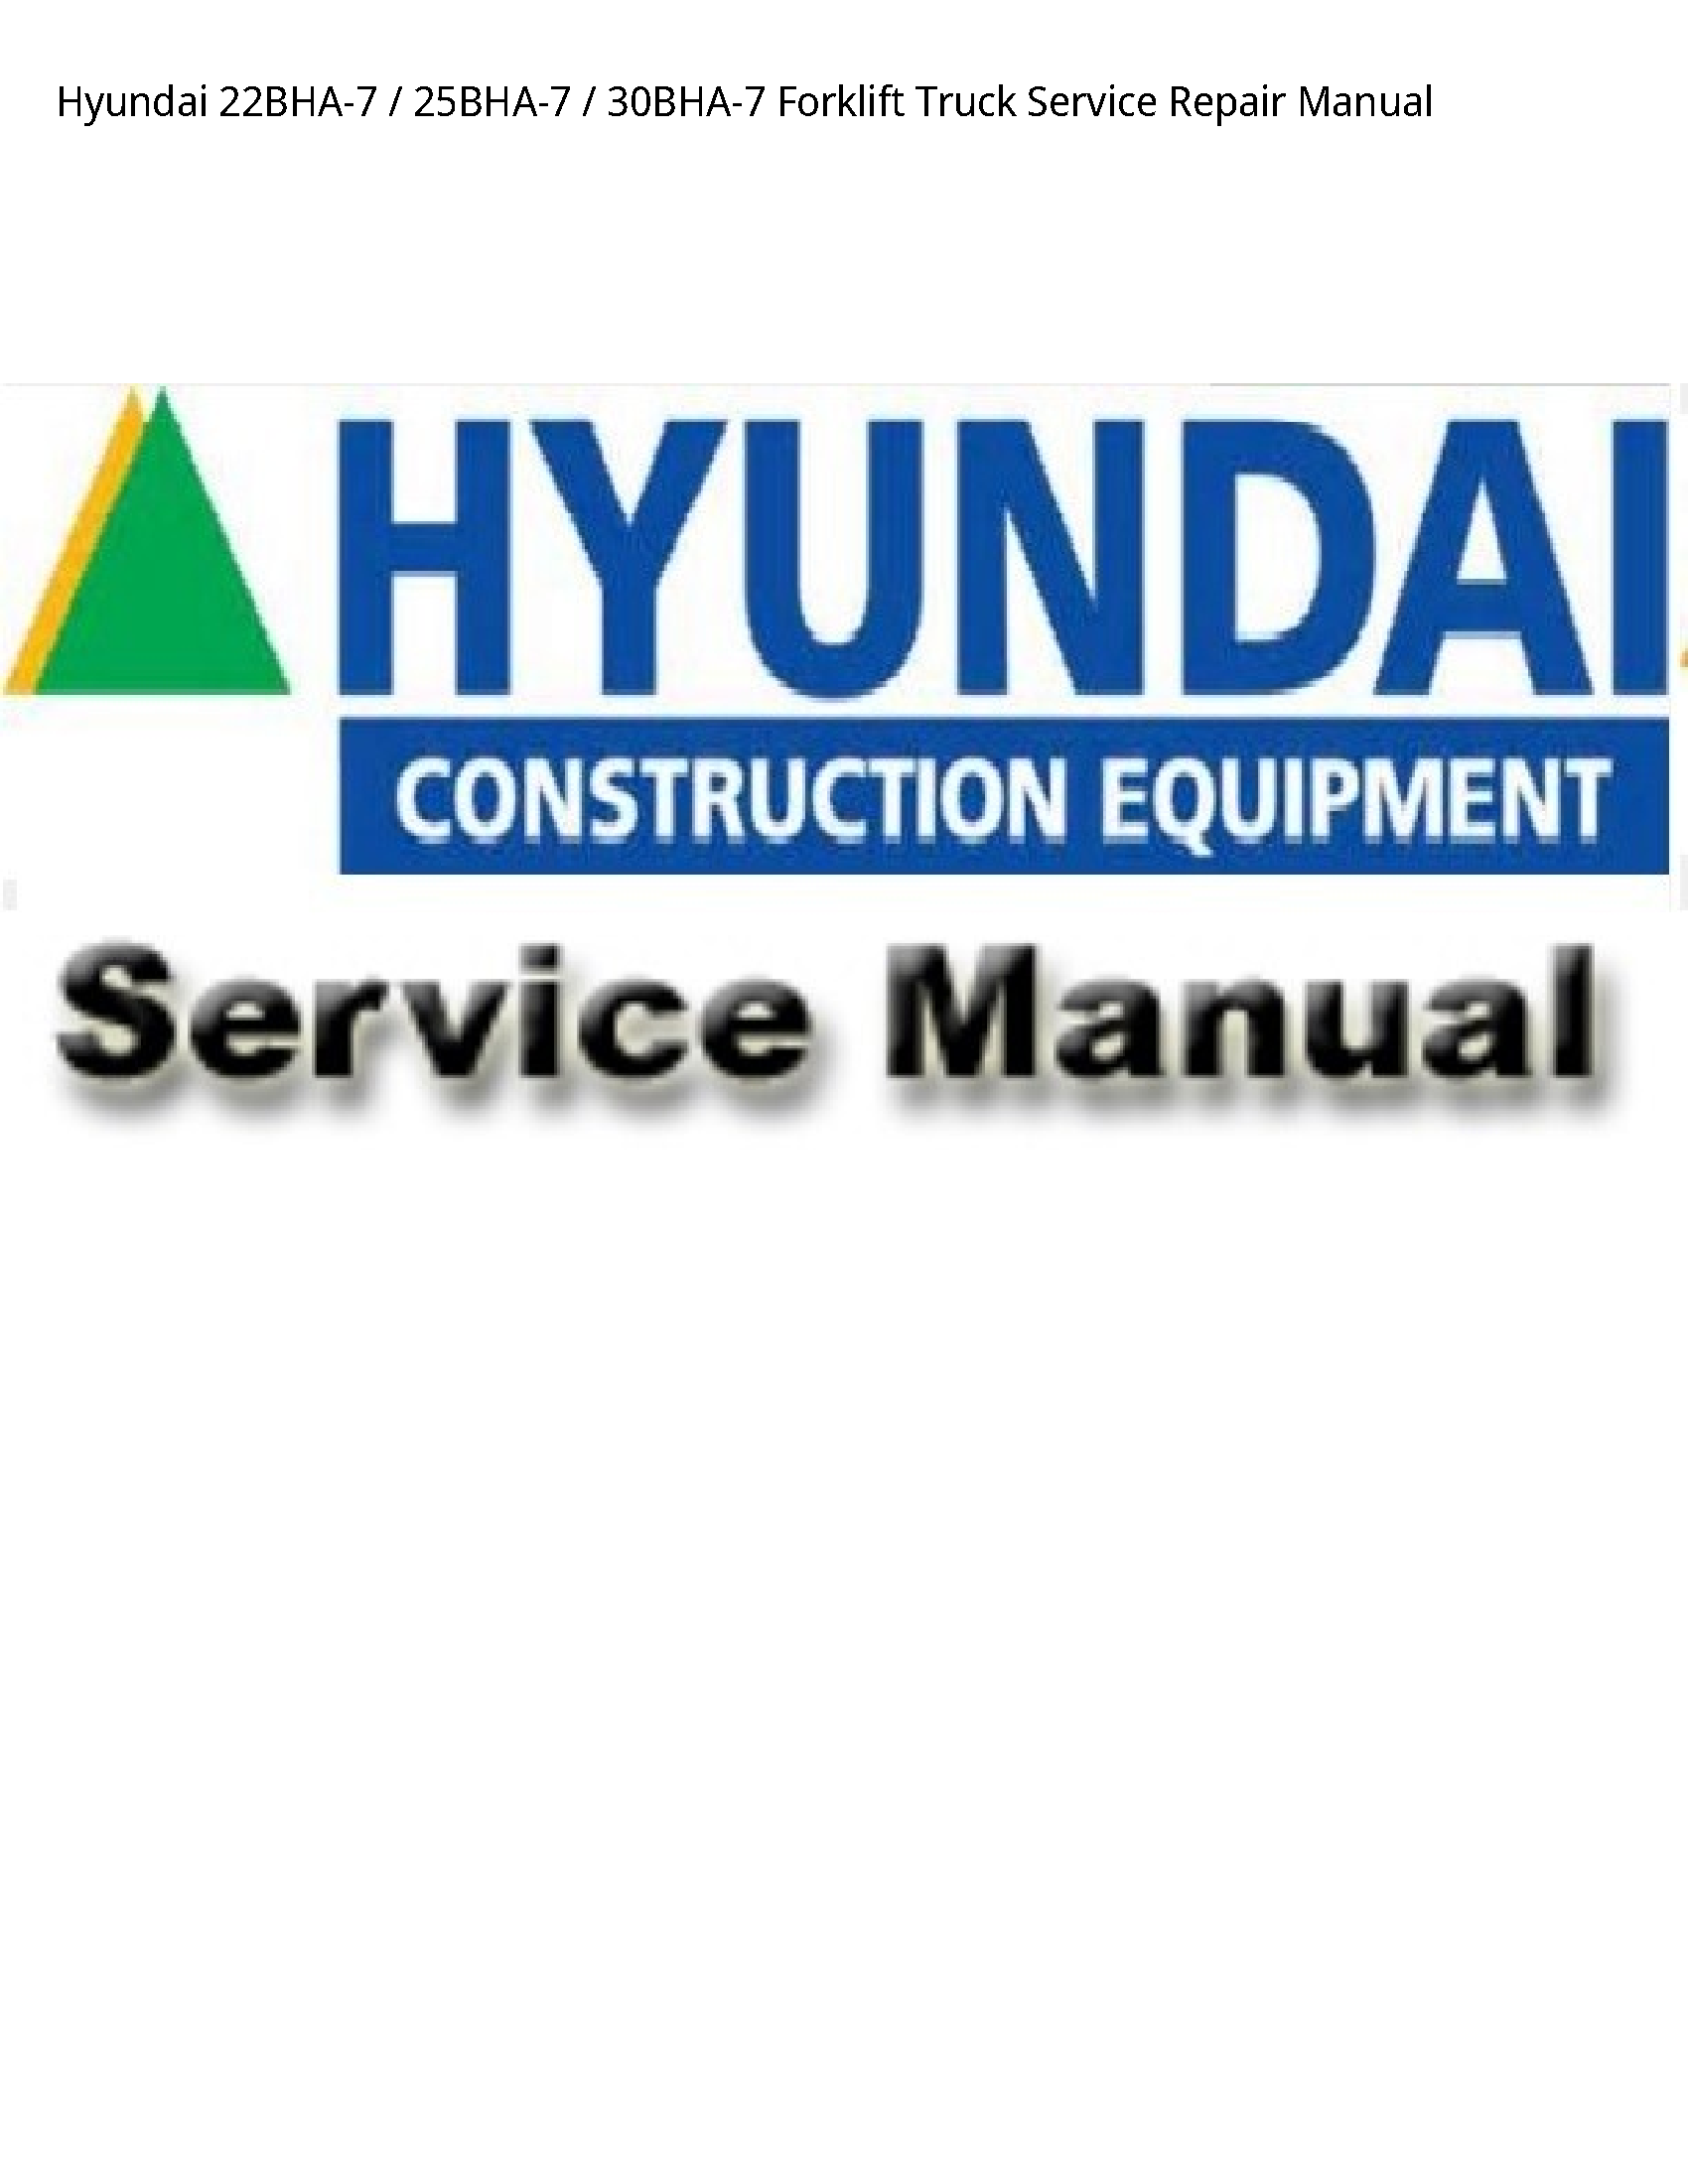 Hyundai 22BHA-7 Forklift Truck manual